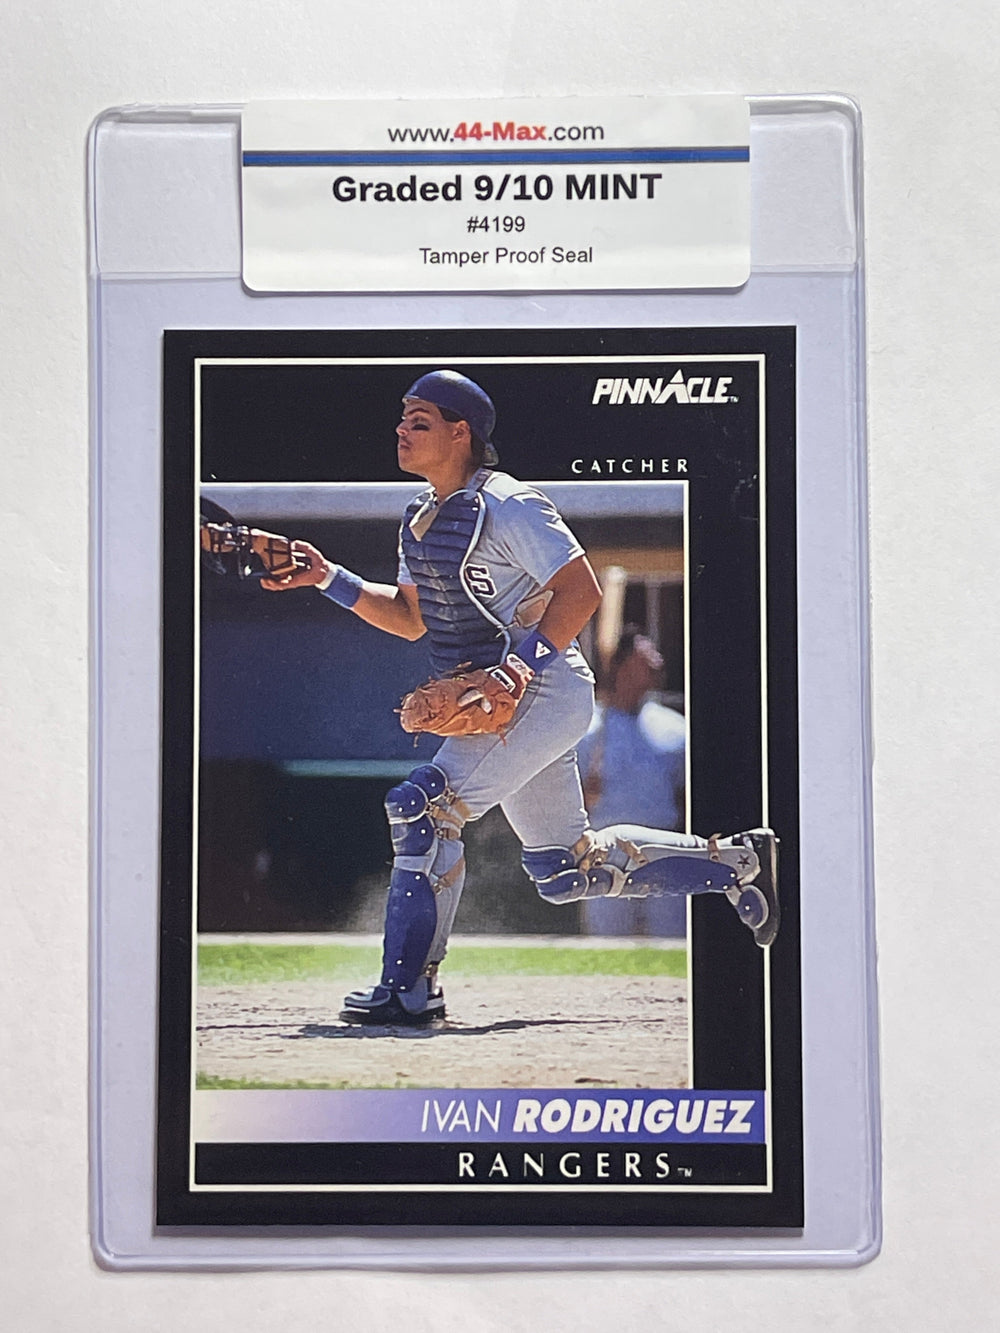 Ivan Rodriguez1992 Pinnacle Baseball Card. 44-Max 9/10 Mint #4199